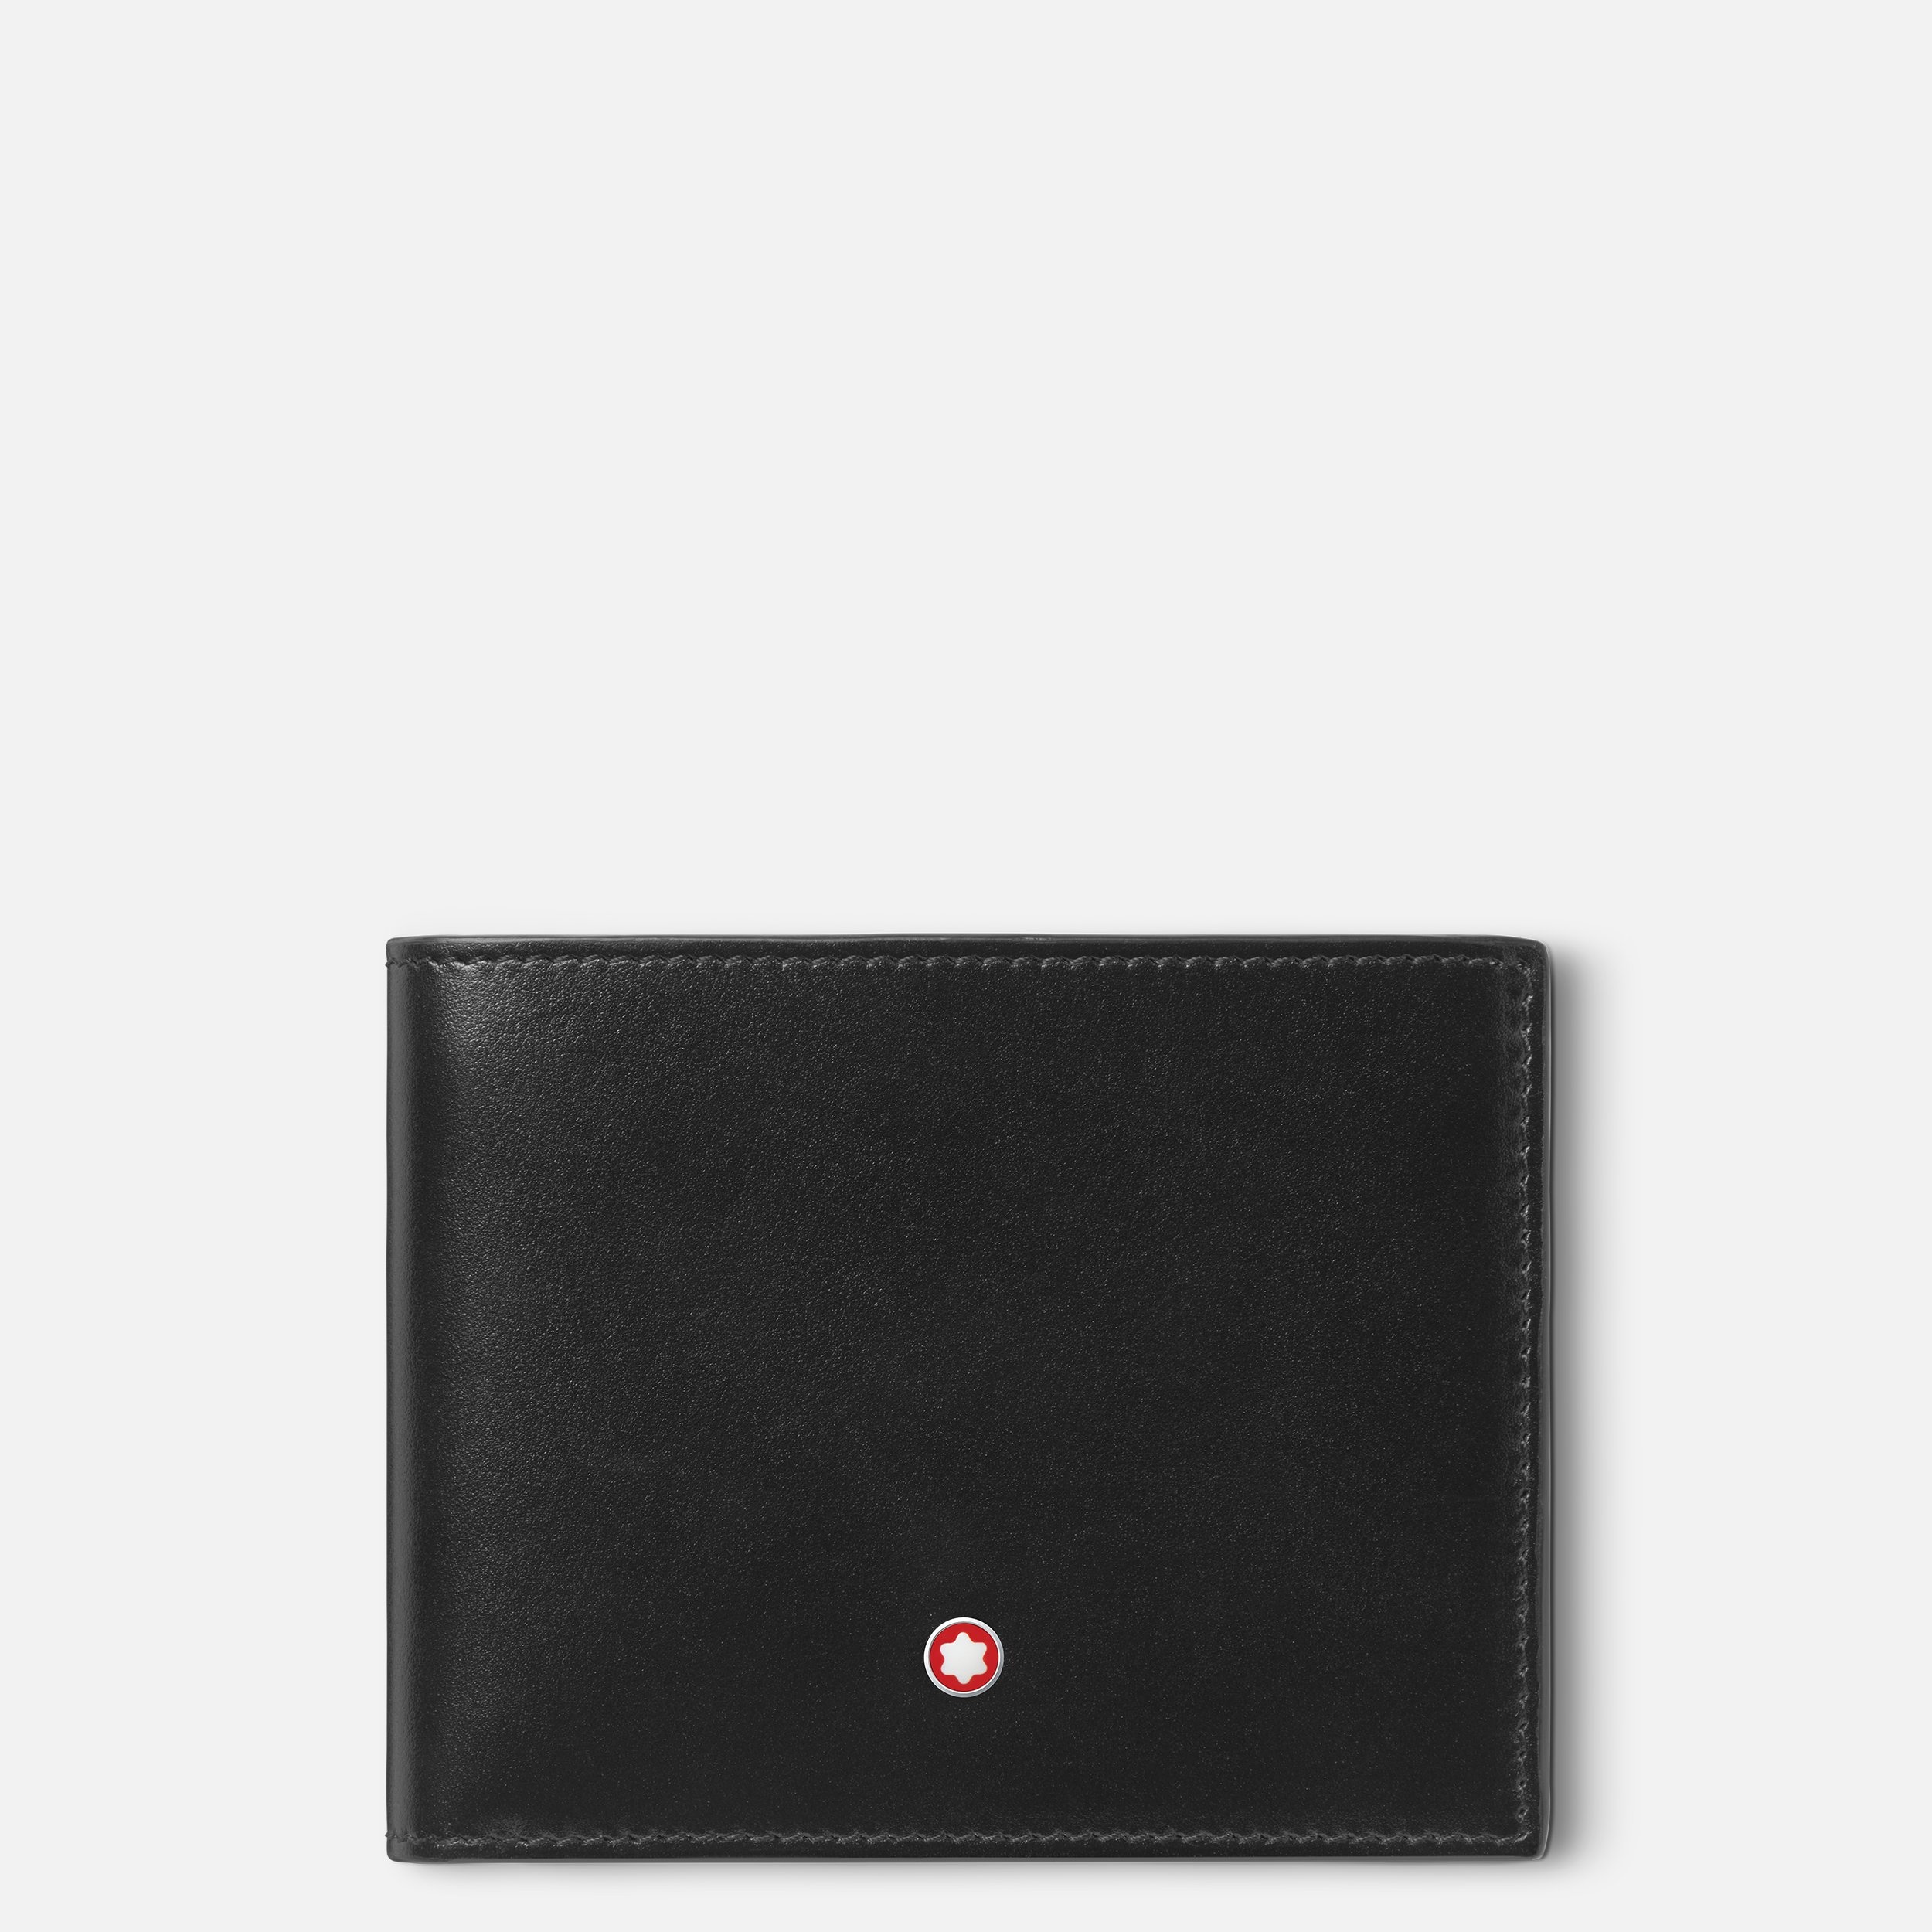 Meisterstück wallet 6cc - 1